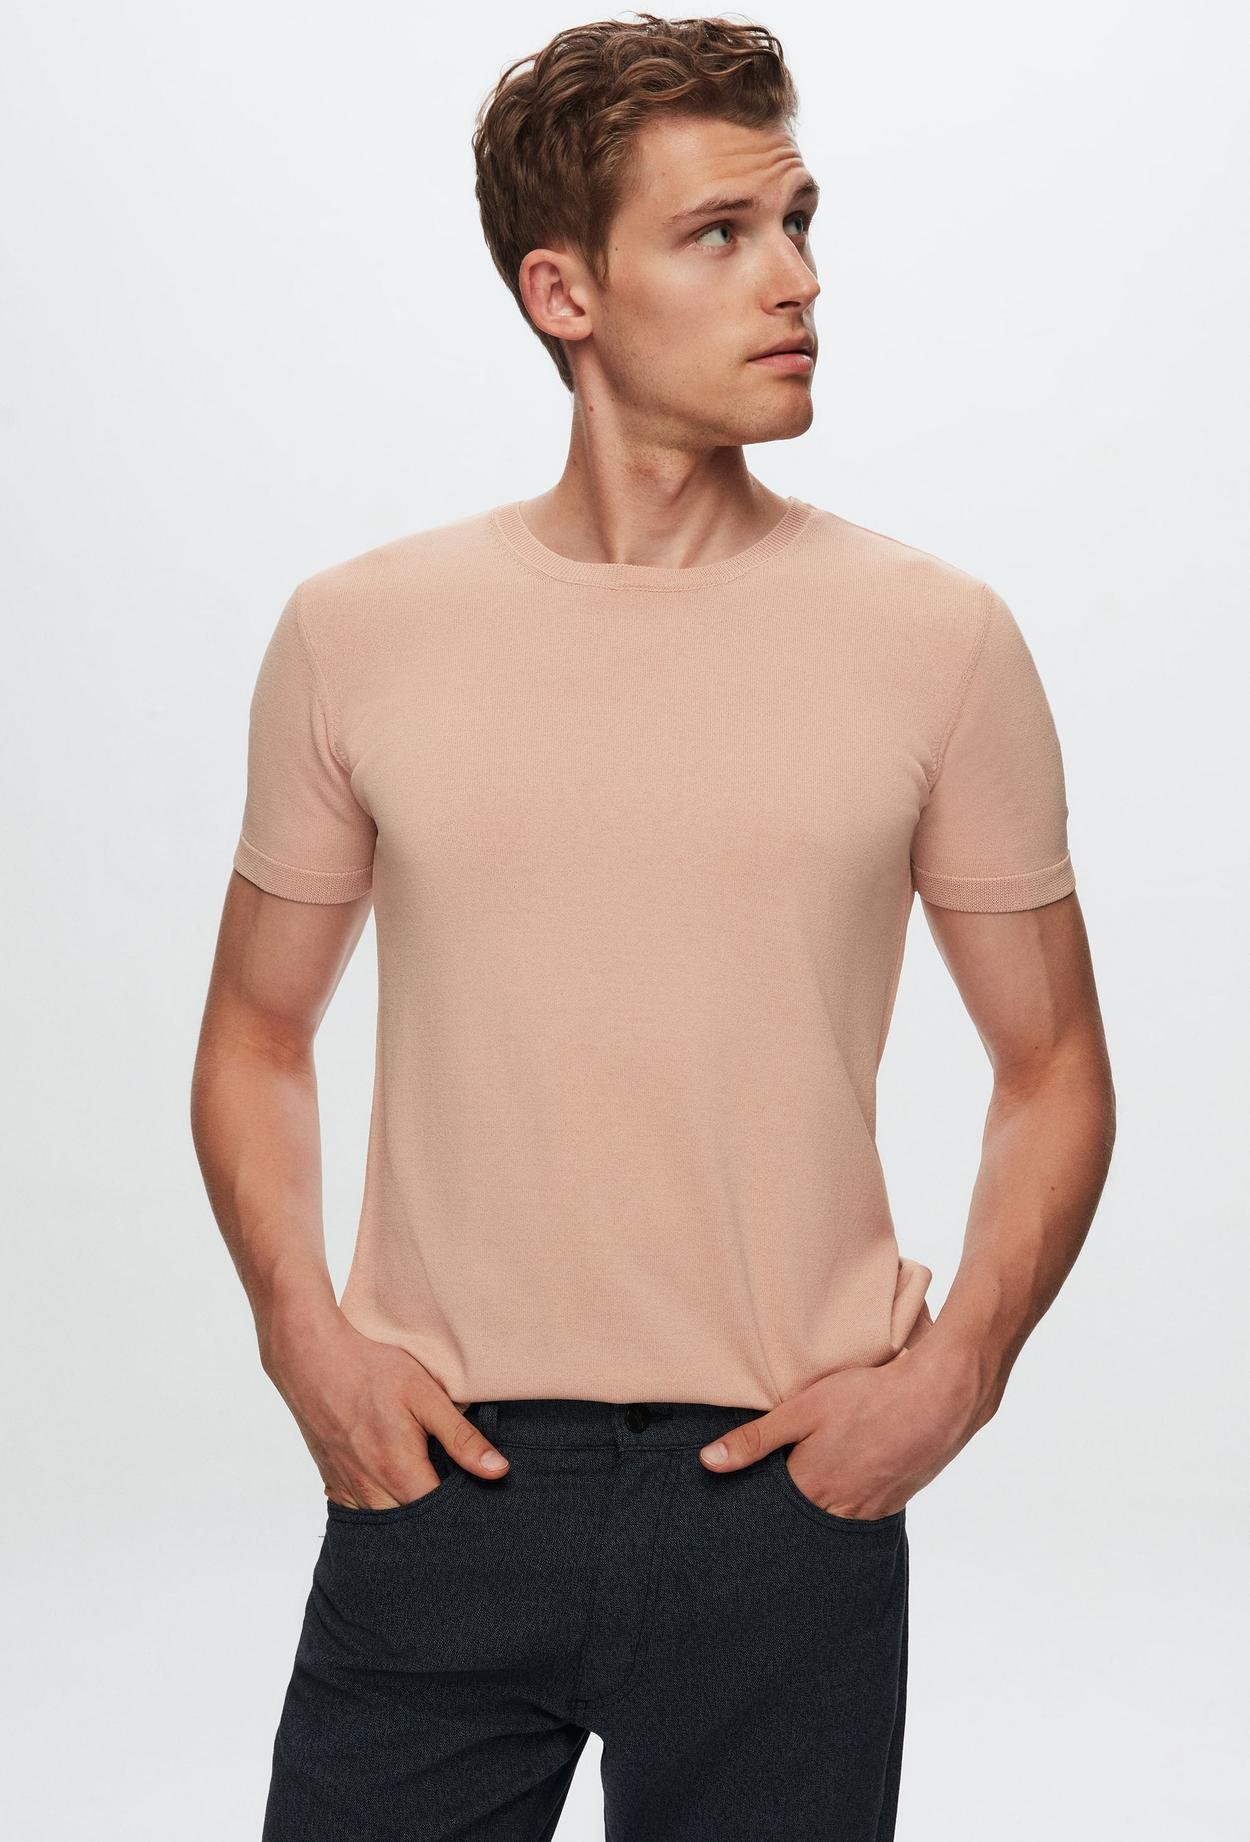 Twn Slim Fit Pudra Düz Örgü Rayon Örme T-Shirt